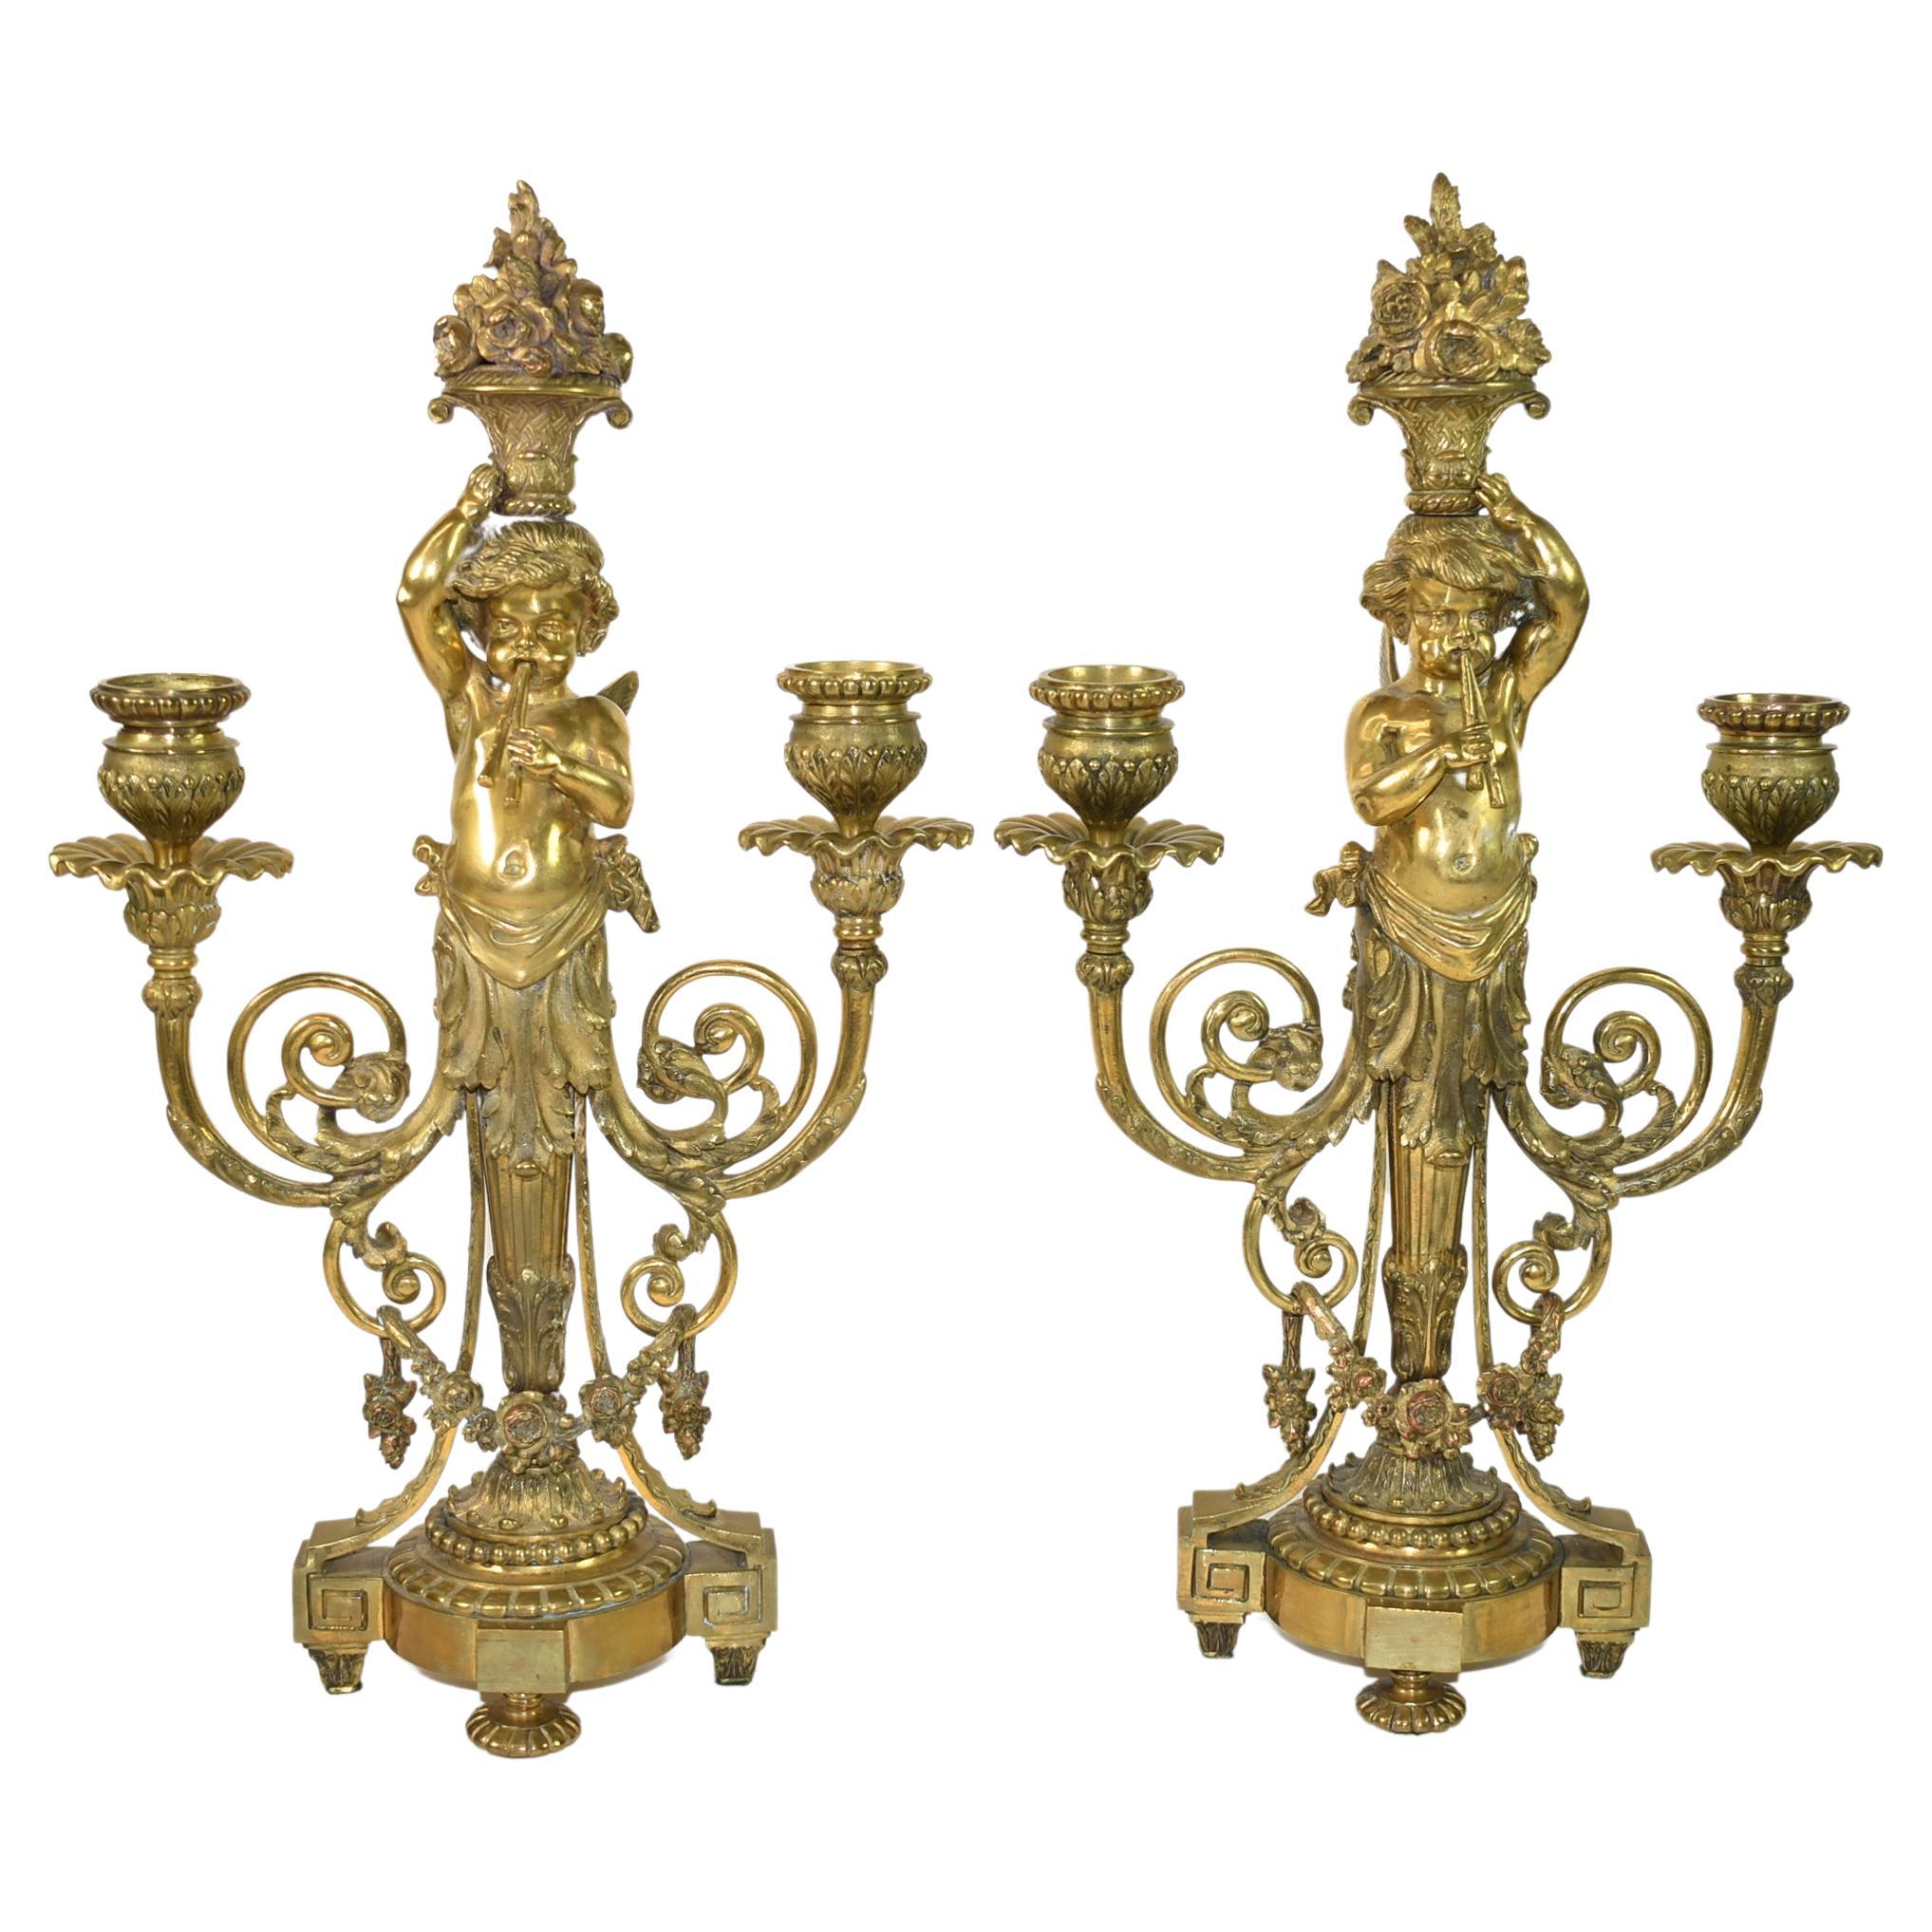 Pair French Neoclassical Gilded Bronze Putti Cherub Candelabras